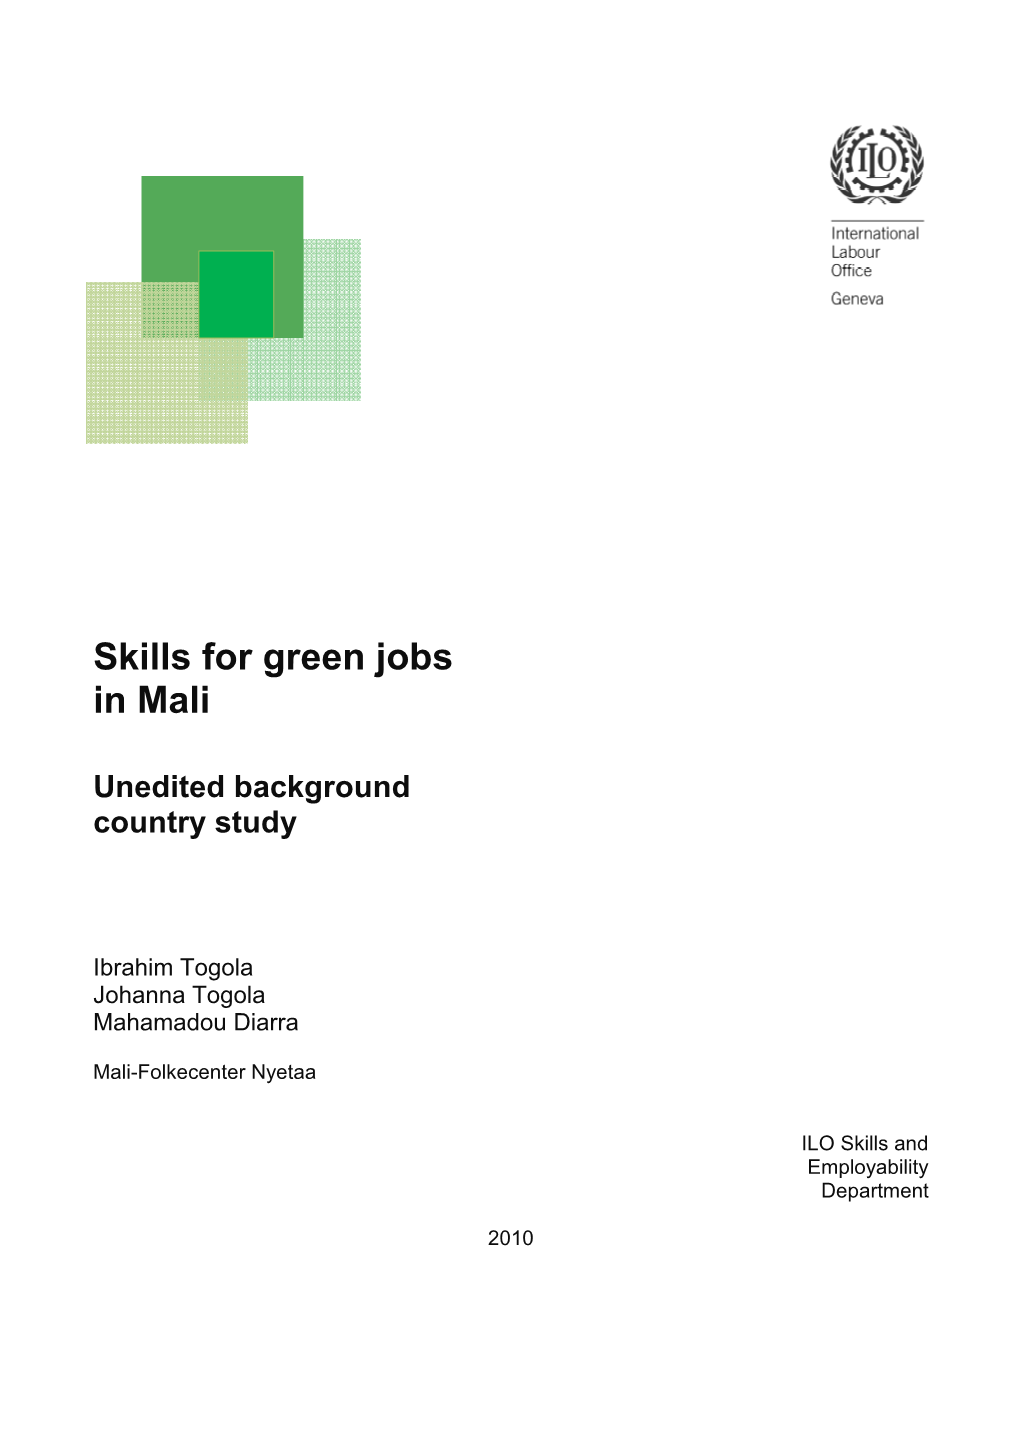 Skills for Green Jobs in Mali